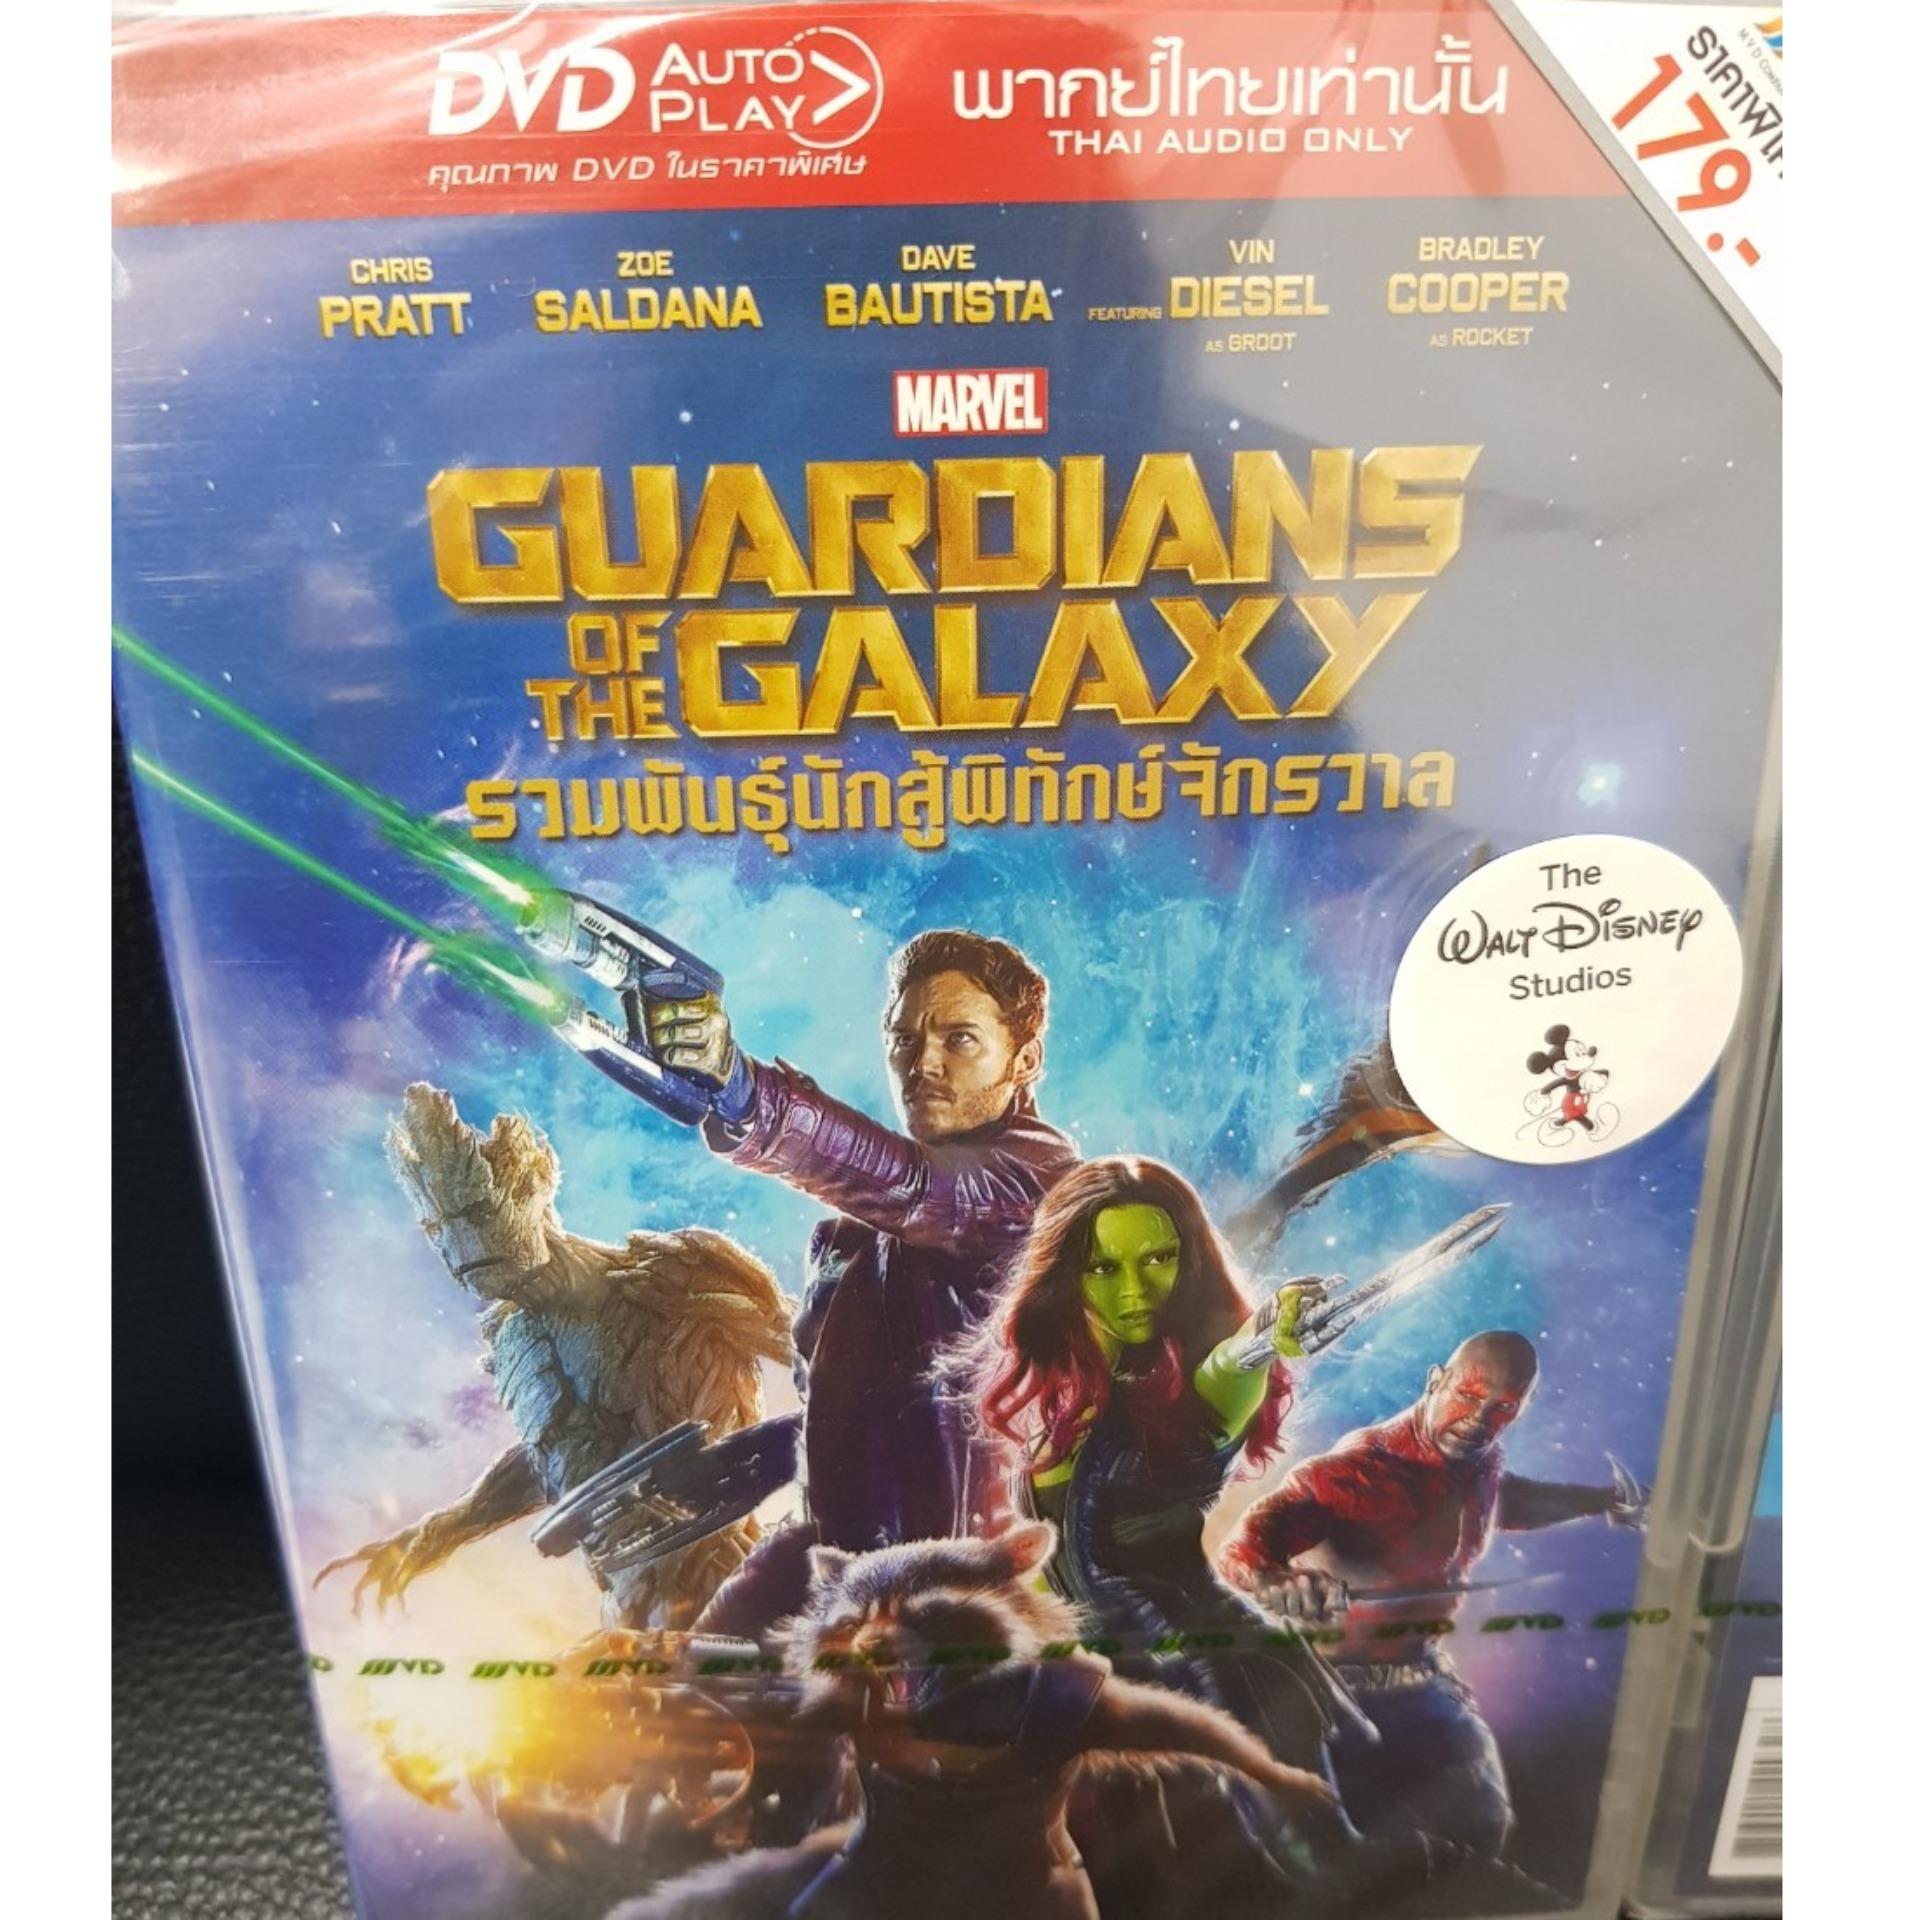 DVDหนัง GUARDIANS OF THE GALAXY รวมพันธ์ุนักสู้พิทักษ์จักรวาล DVD AUTO PLAY พากย์ไทยเท่านั้น (MVDDVDไทย179-GUARDIANSOFTHEGALAXYรวมพันธ์ุนักสู้พิทักษ์จักรวาล) MVD DISNEY PIXAR CD MARVEL VCD DVD หนัง action หนังแอ๊คชั่น การ์ตูน ดิสนีย์ cartoon